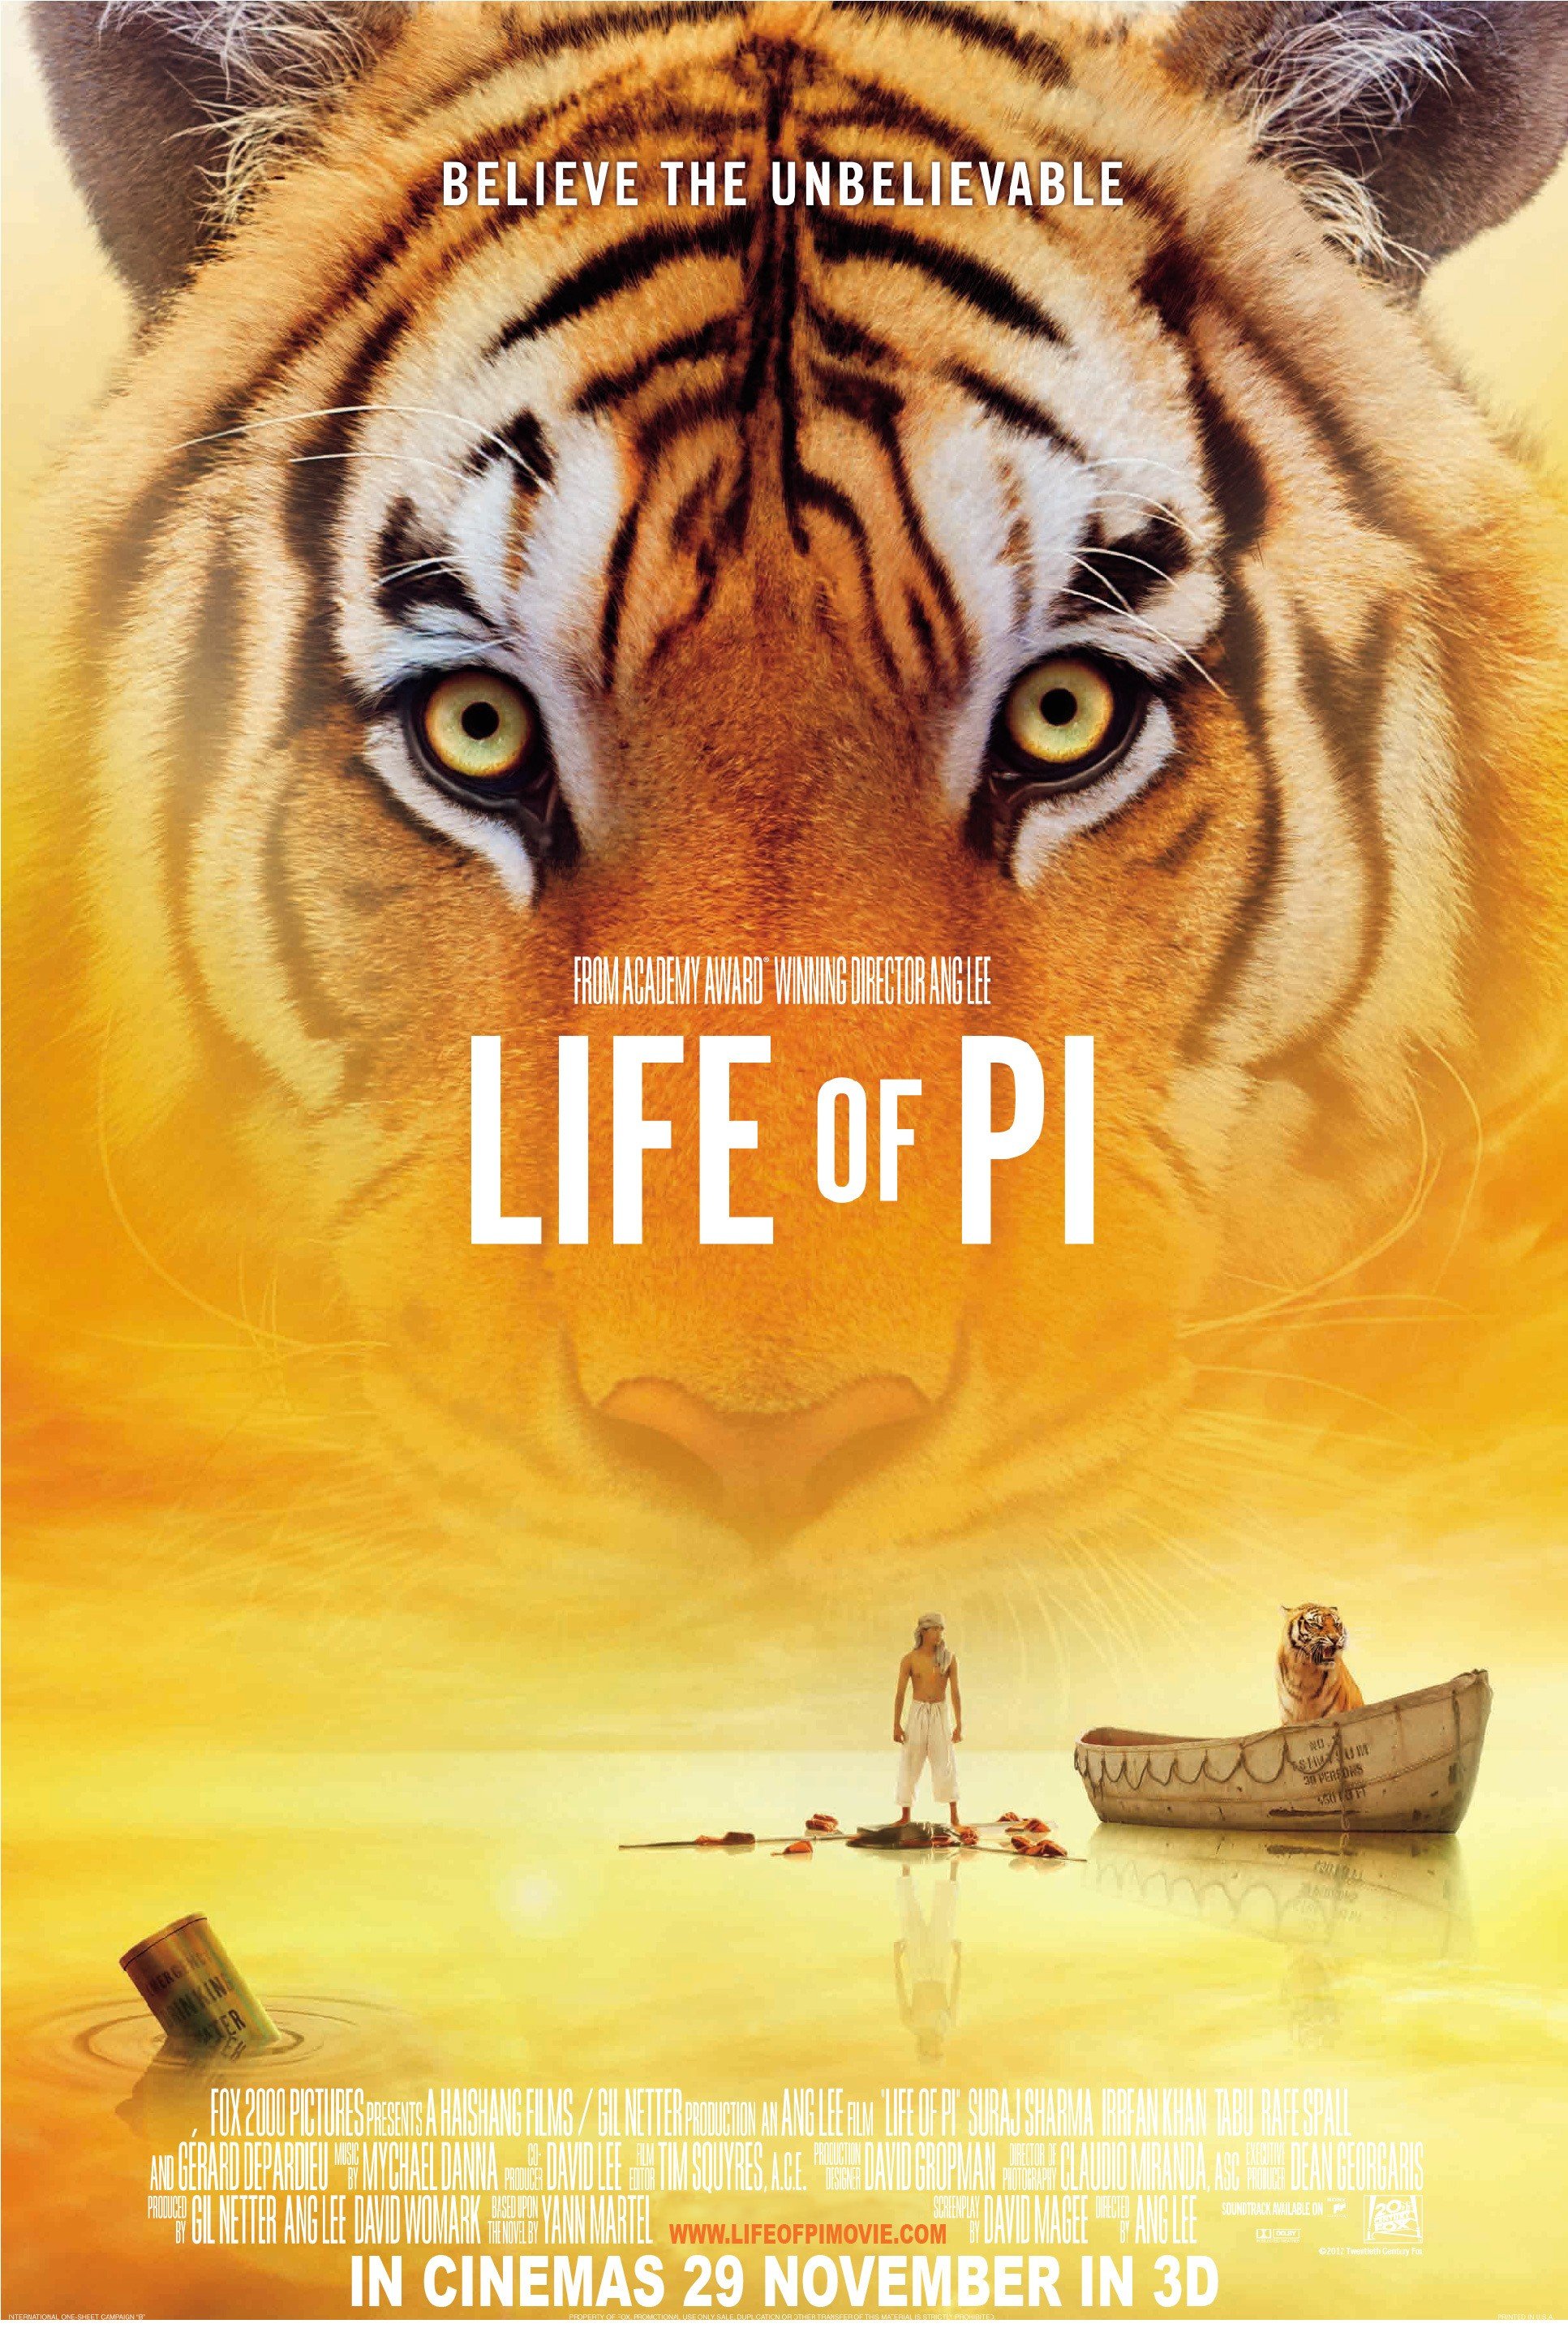 Life of Pi - Inspirational Book